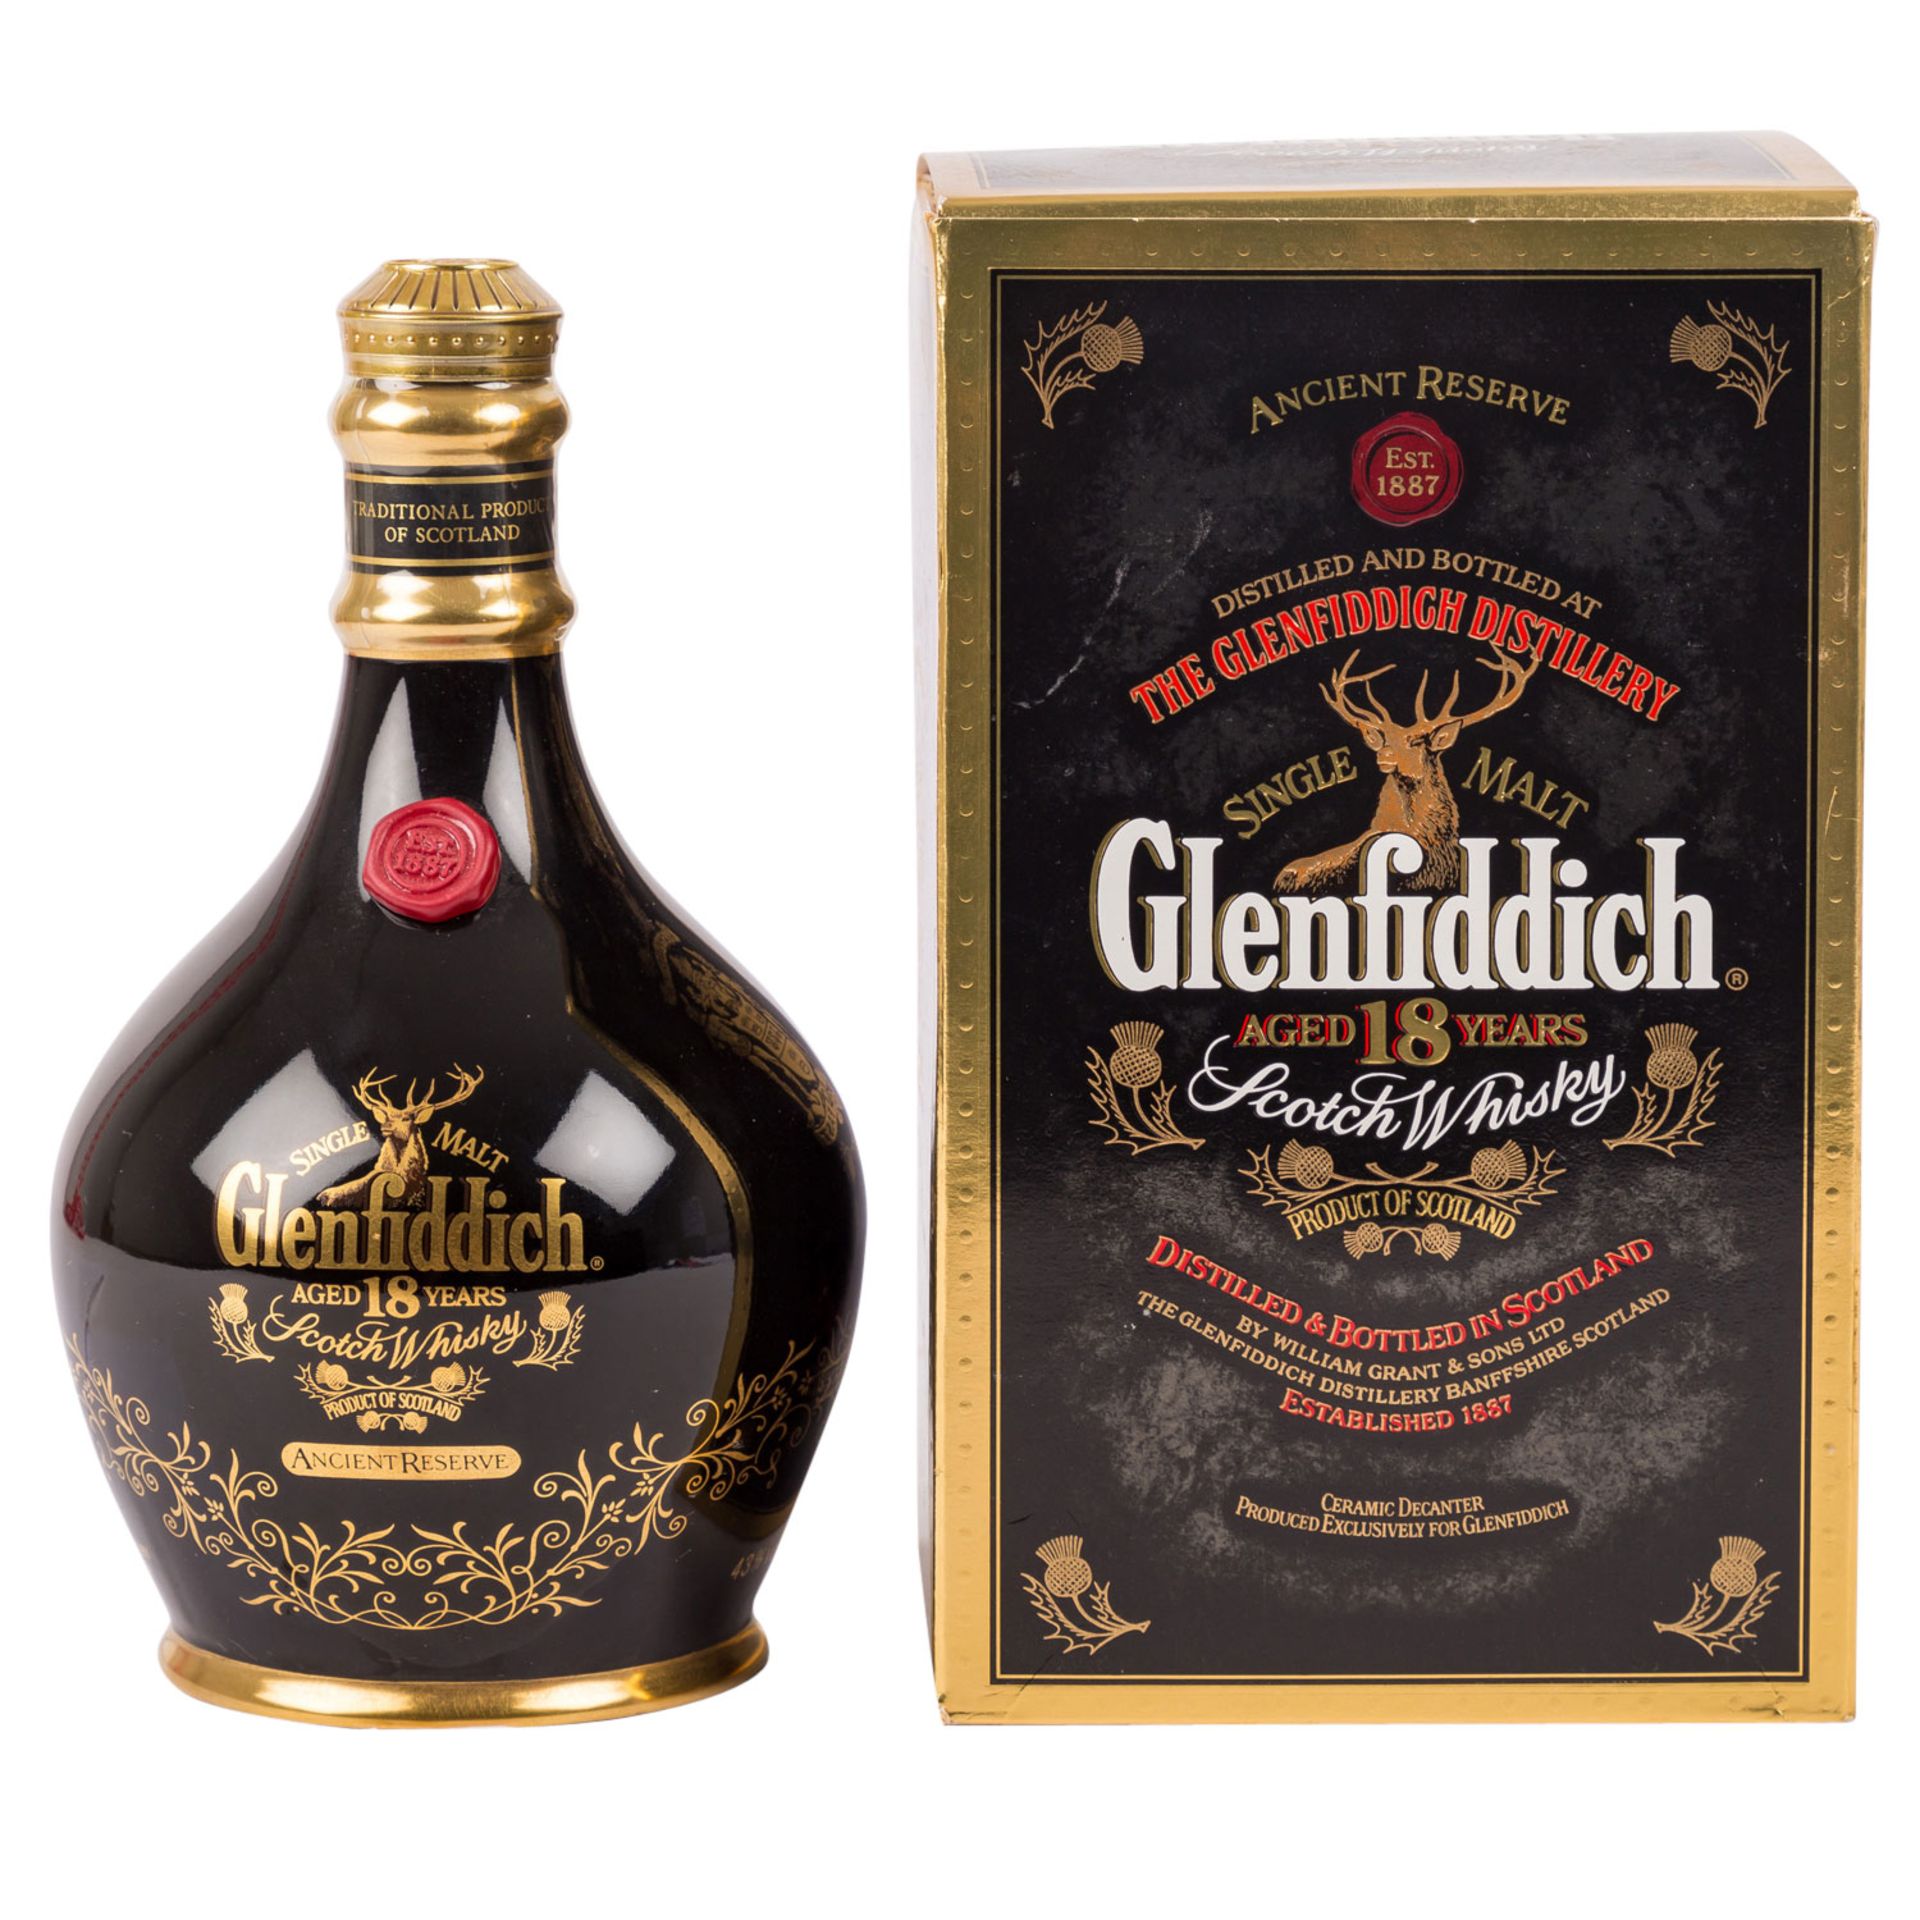 GLENFIDDICH Single Malt Scotch Whisky 'Ancient Reserve', 18 years